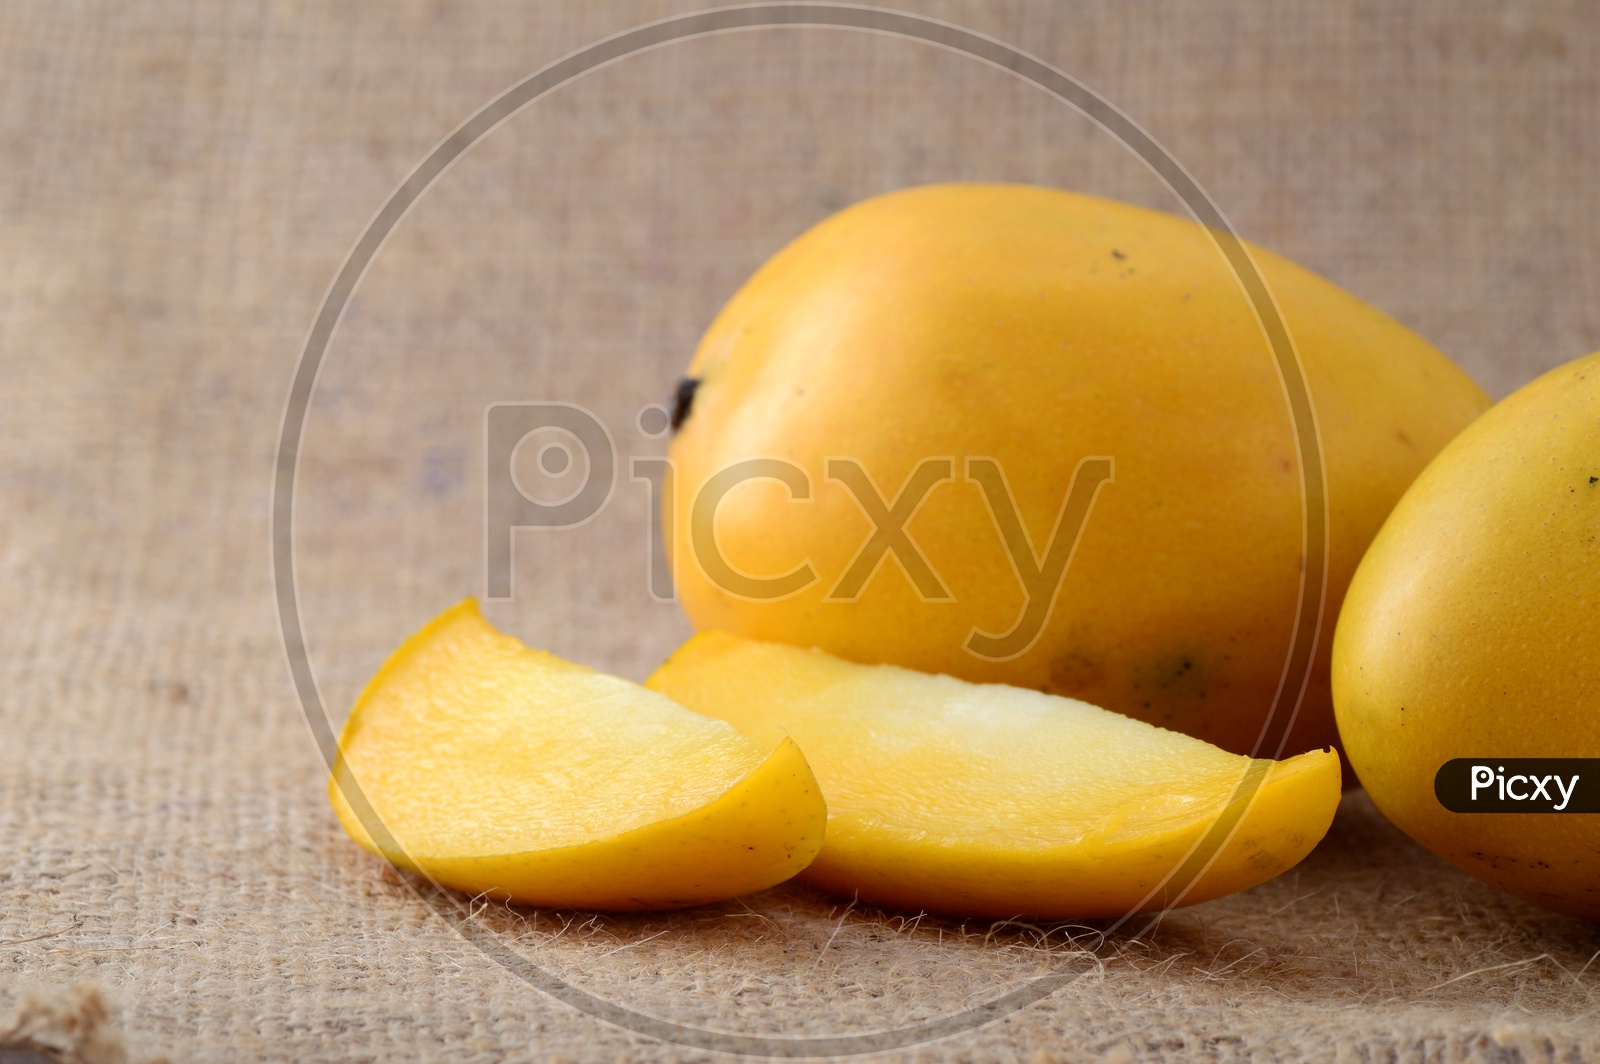 Fresh Ripen Mangoes And Mango Slices On a Sack Cloth Background